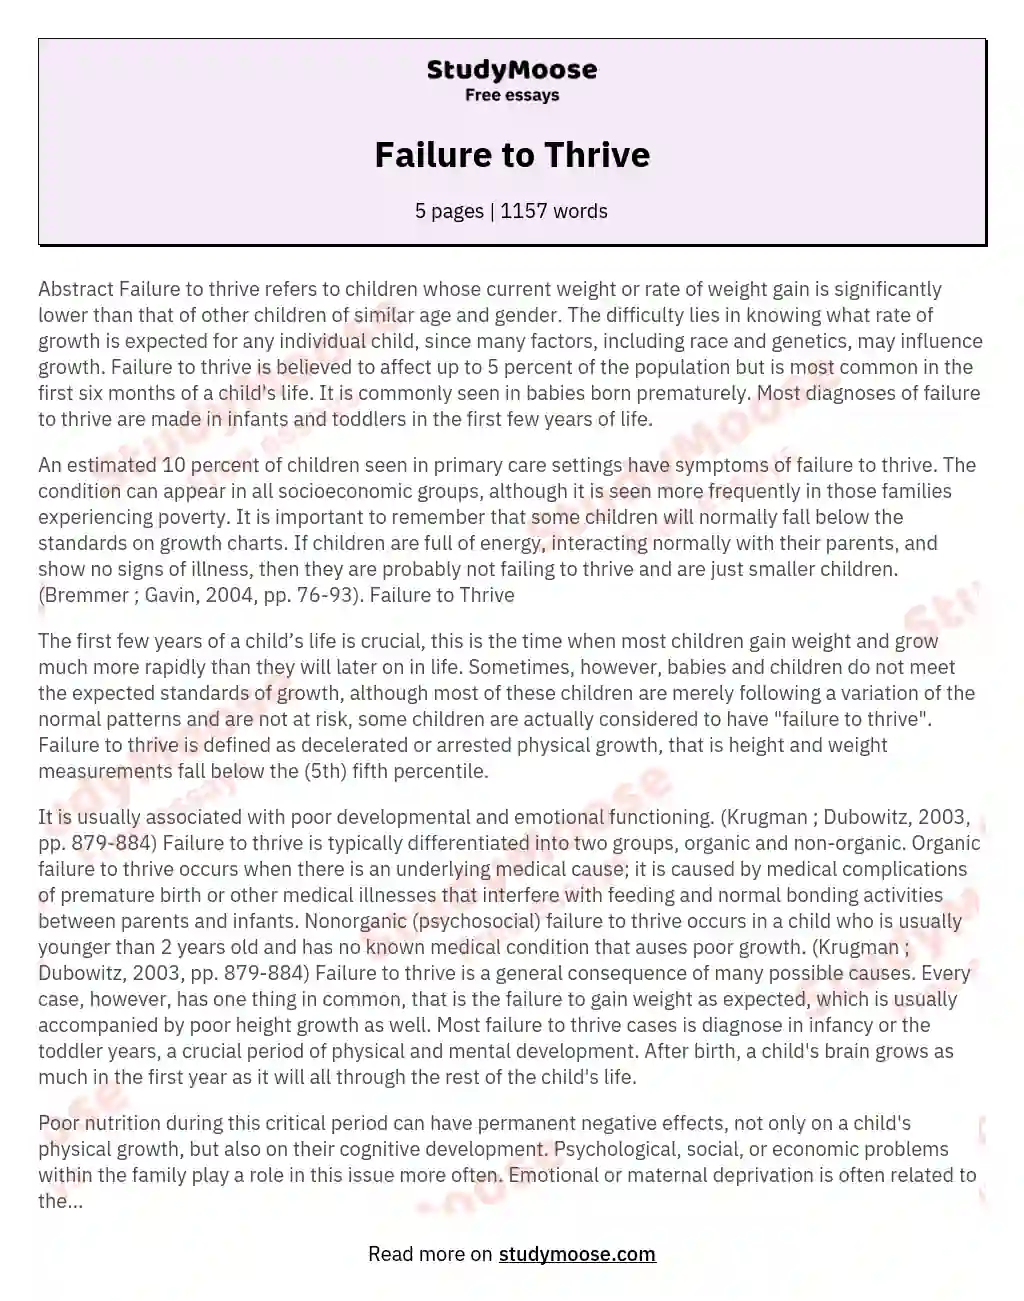 Failure to Thrive essay